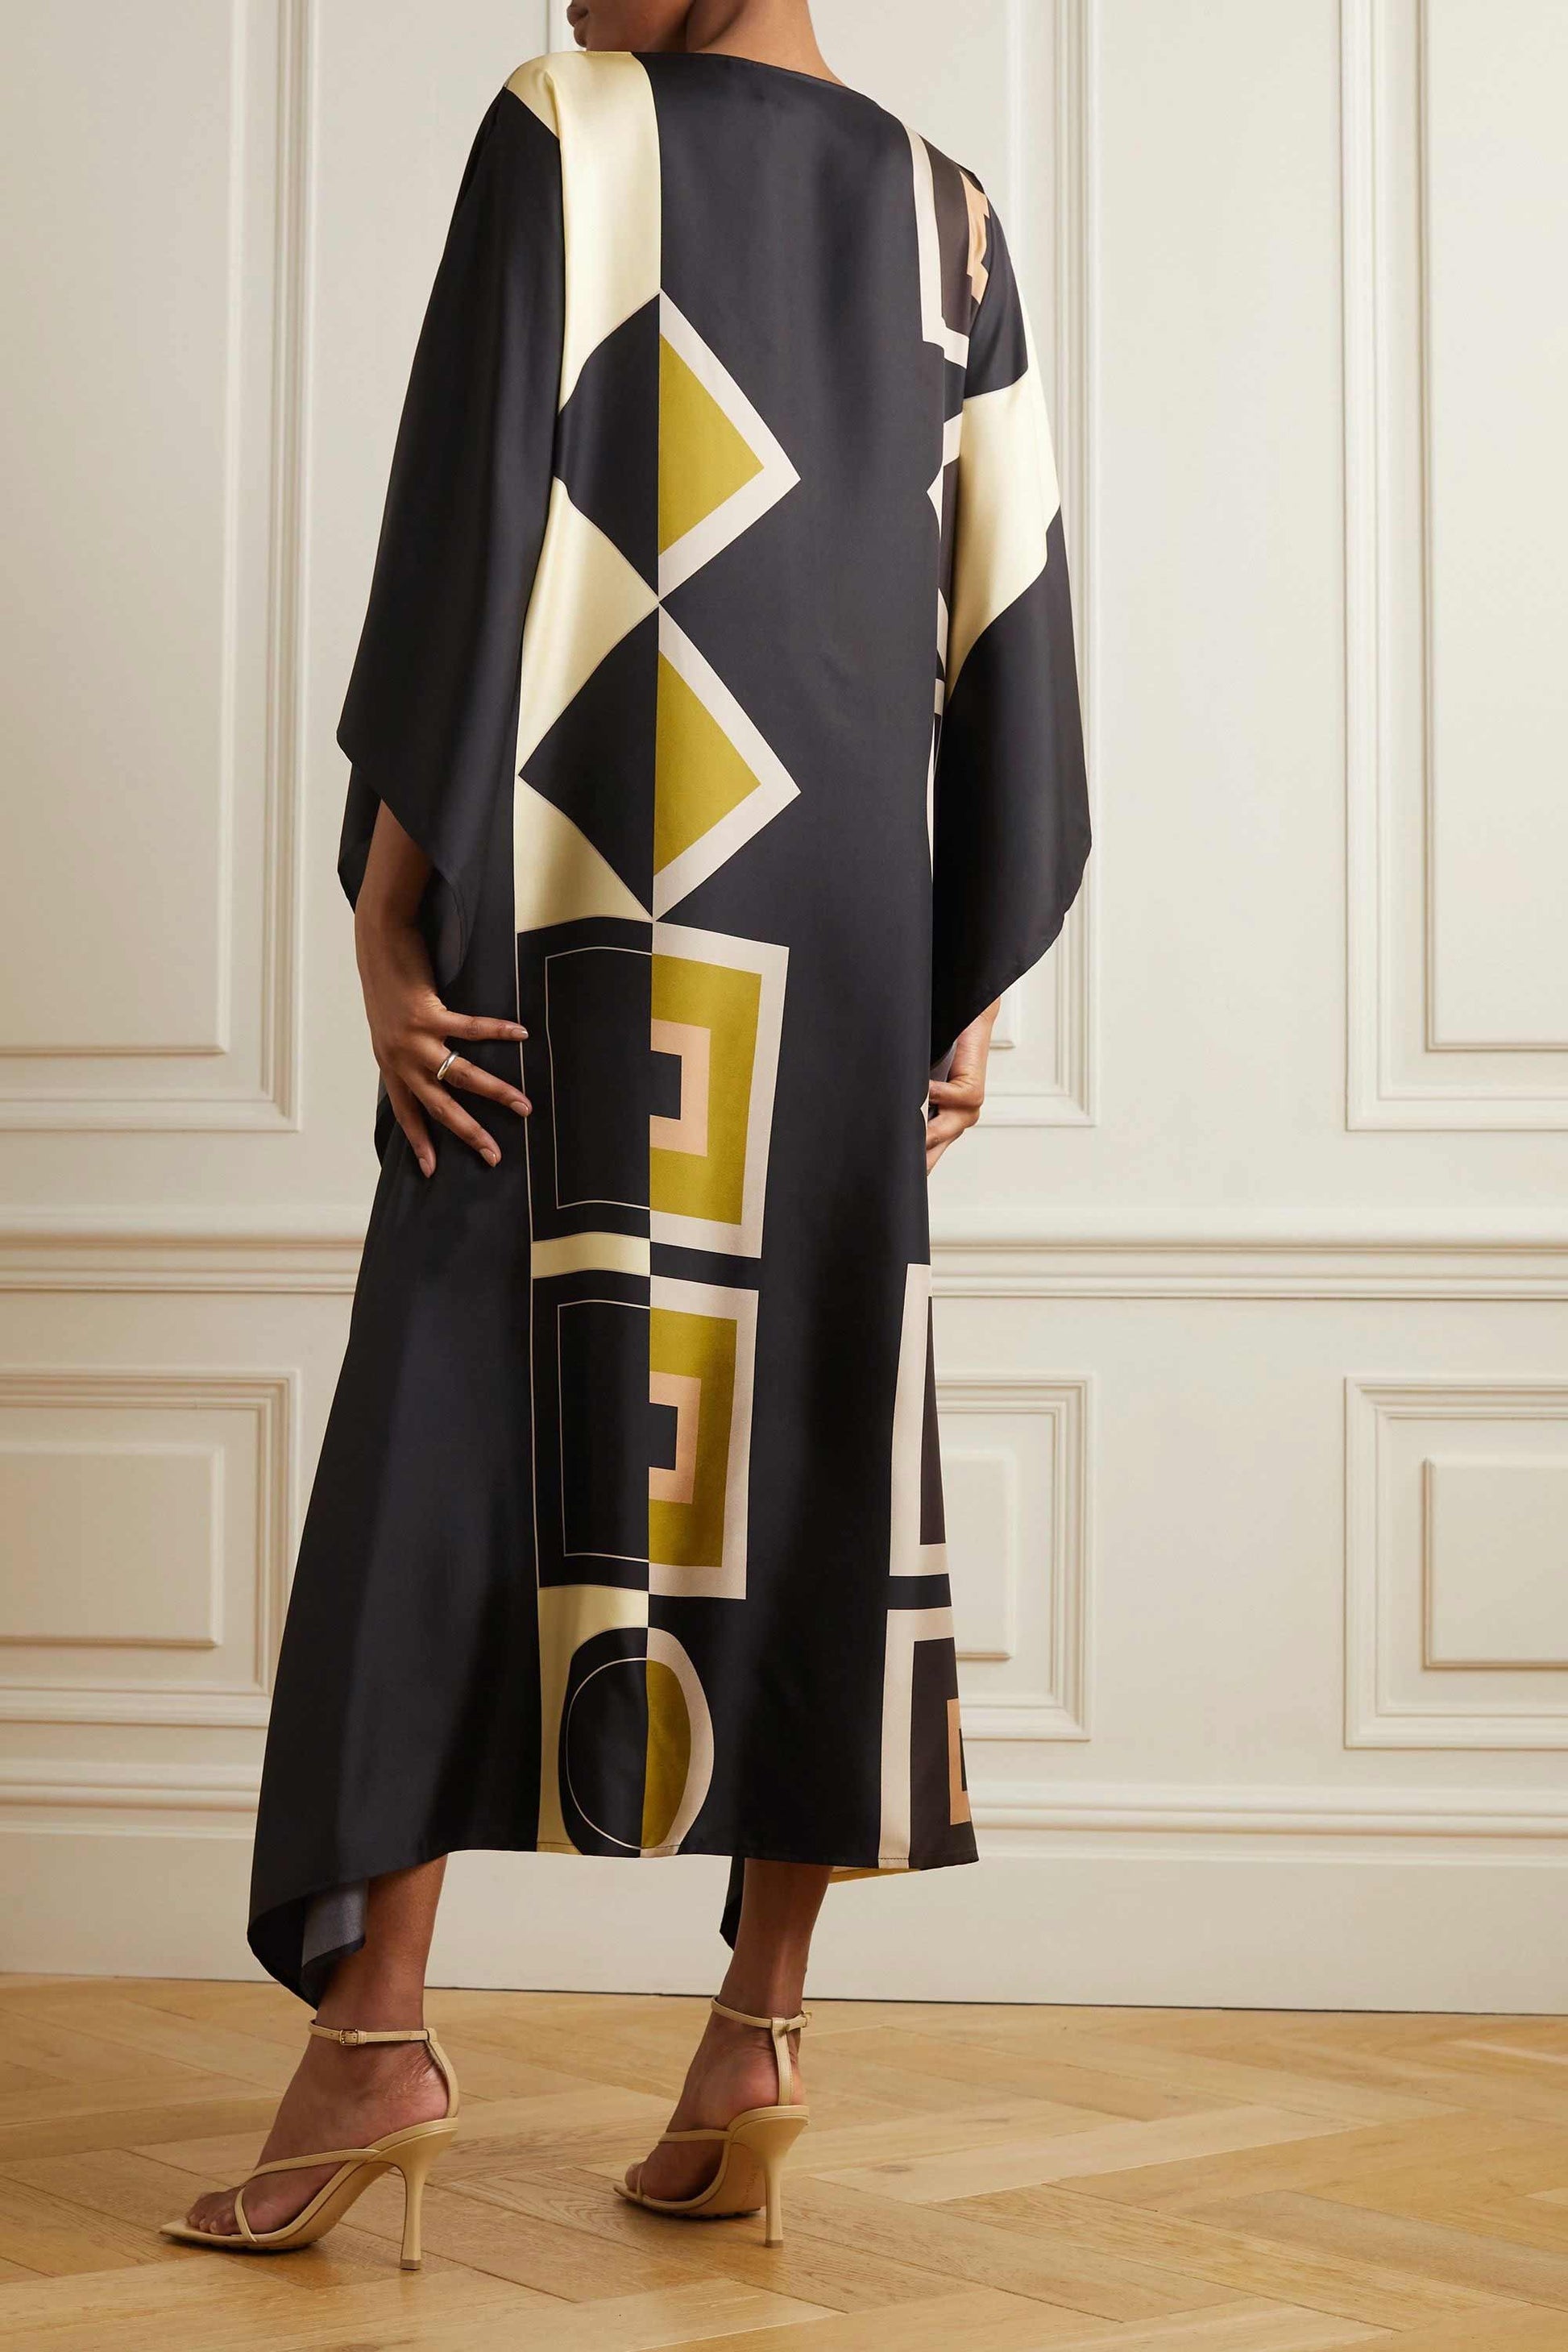 Model wearing black and cream geometric patterned kaftan with waist tie